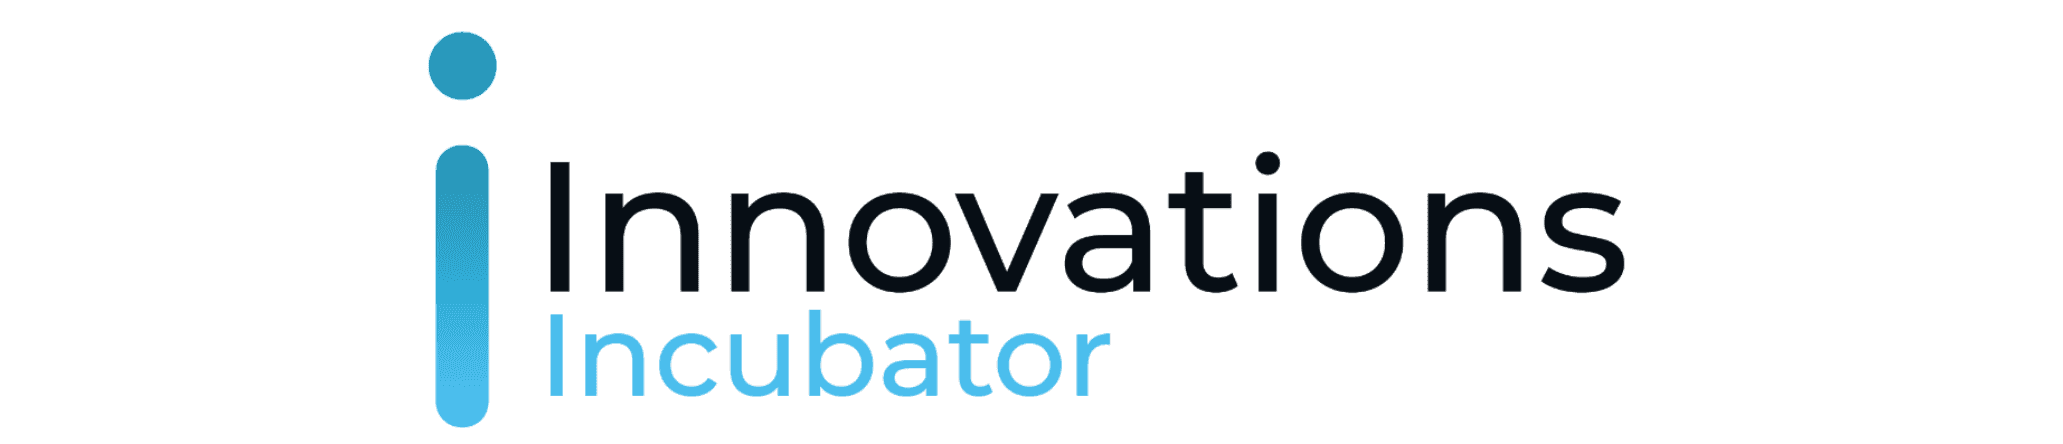 Innovations Incubator